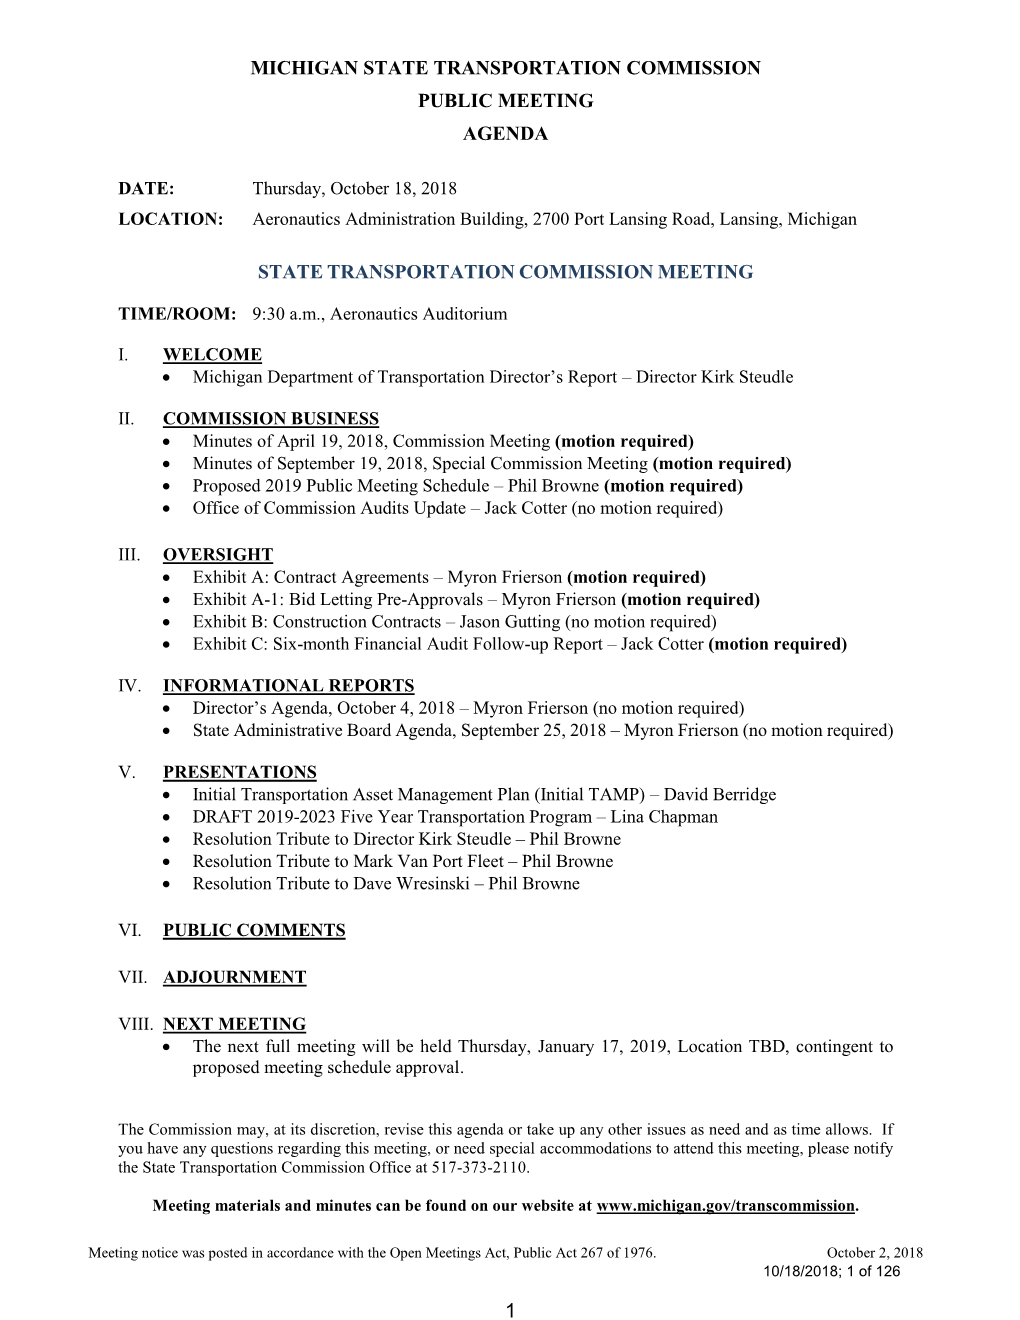 Michigan State Transportation Commission Public Meeting Agenda